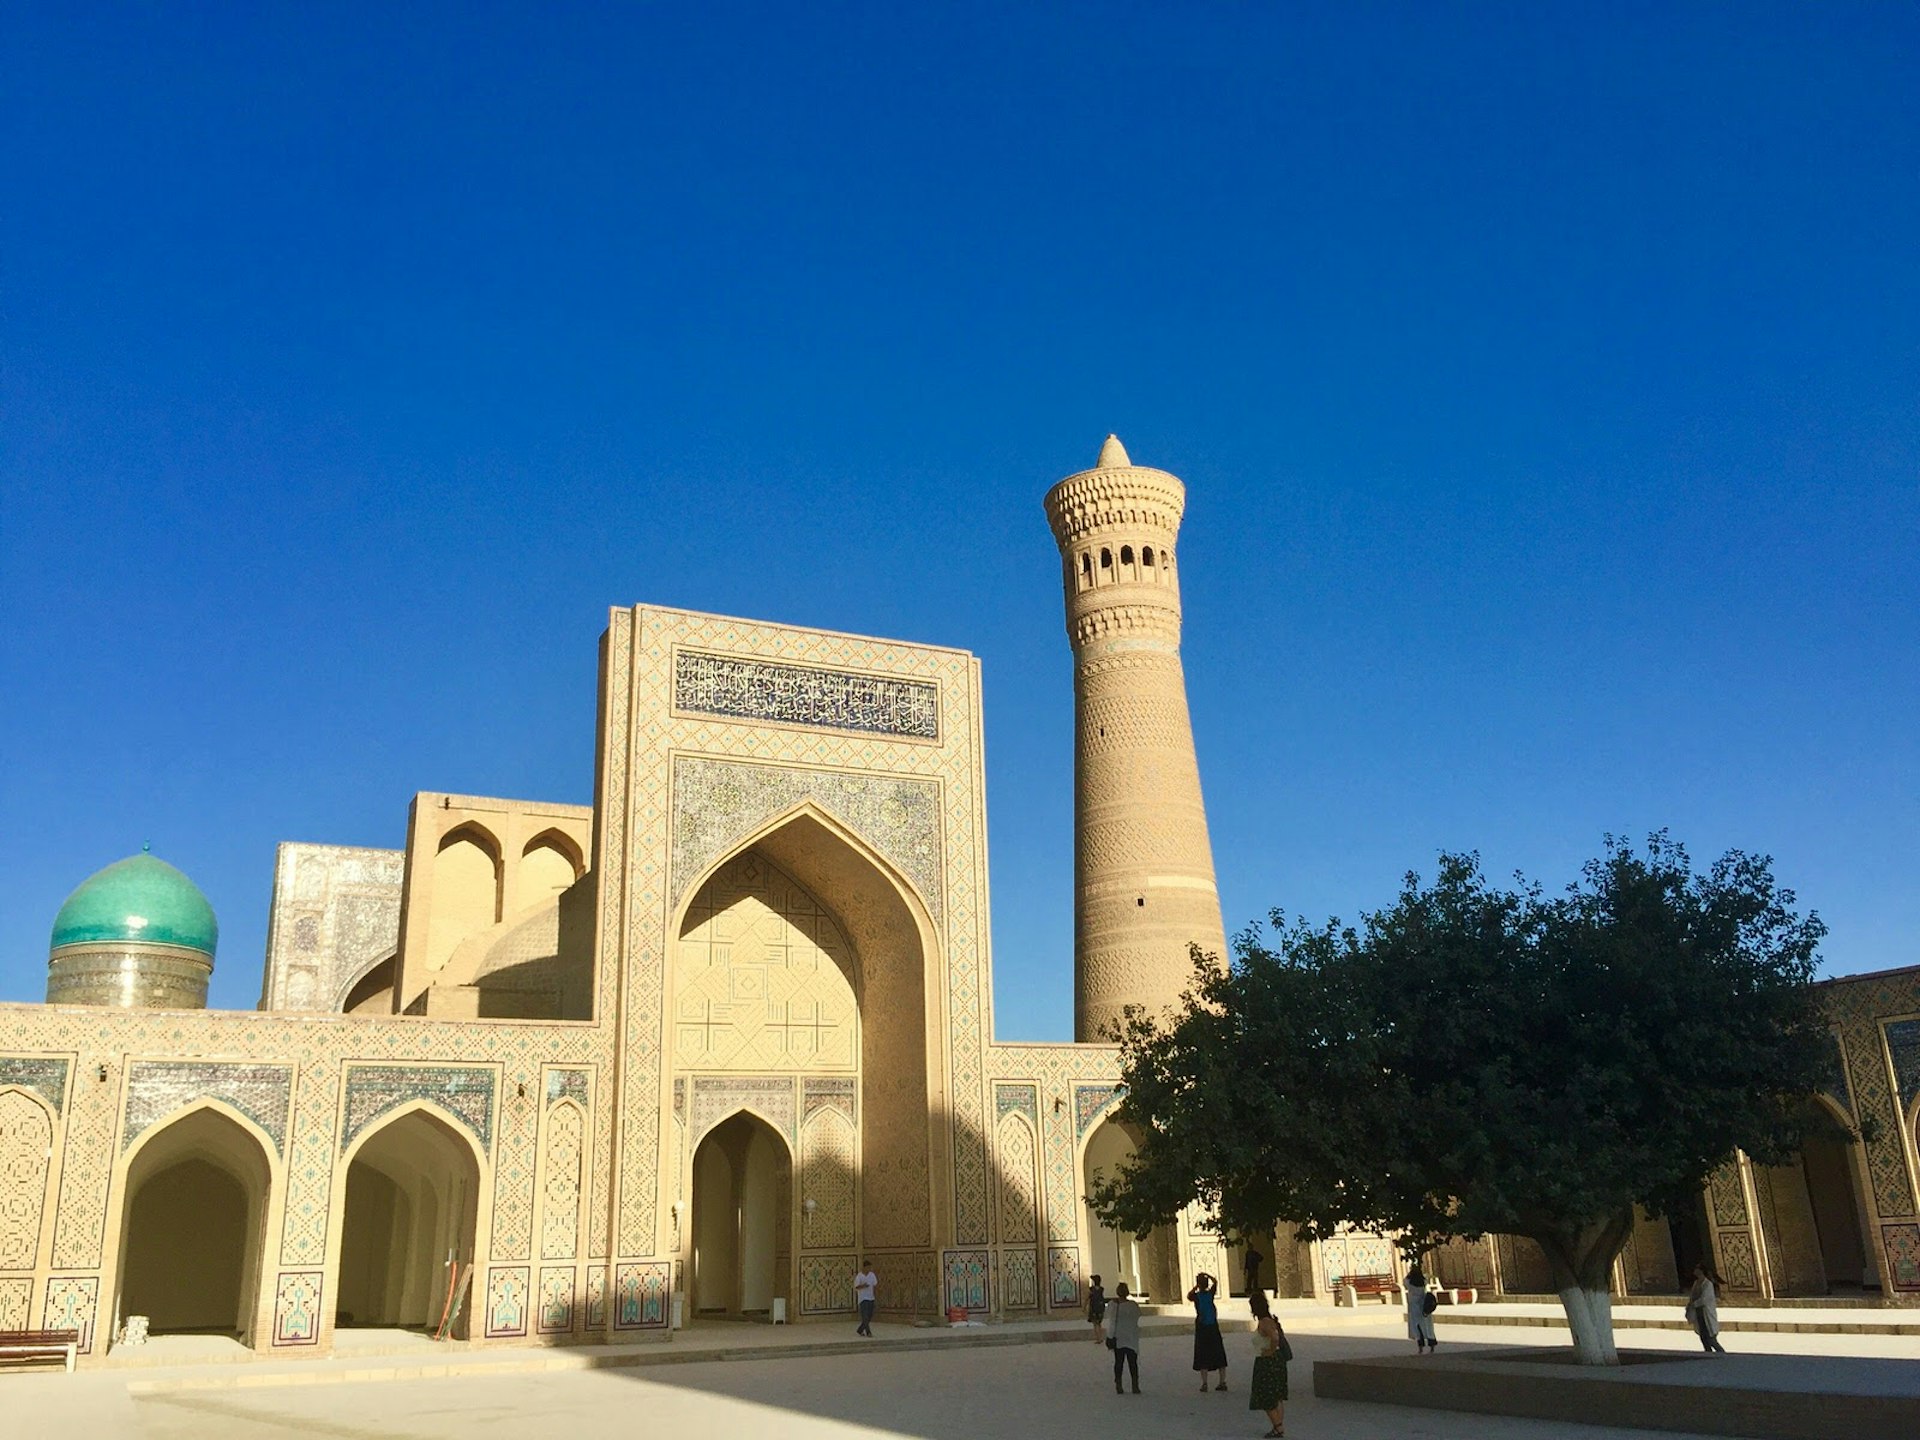 Bukhara's Kalon Mosque and minaret against a blue sky